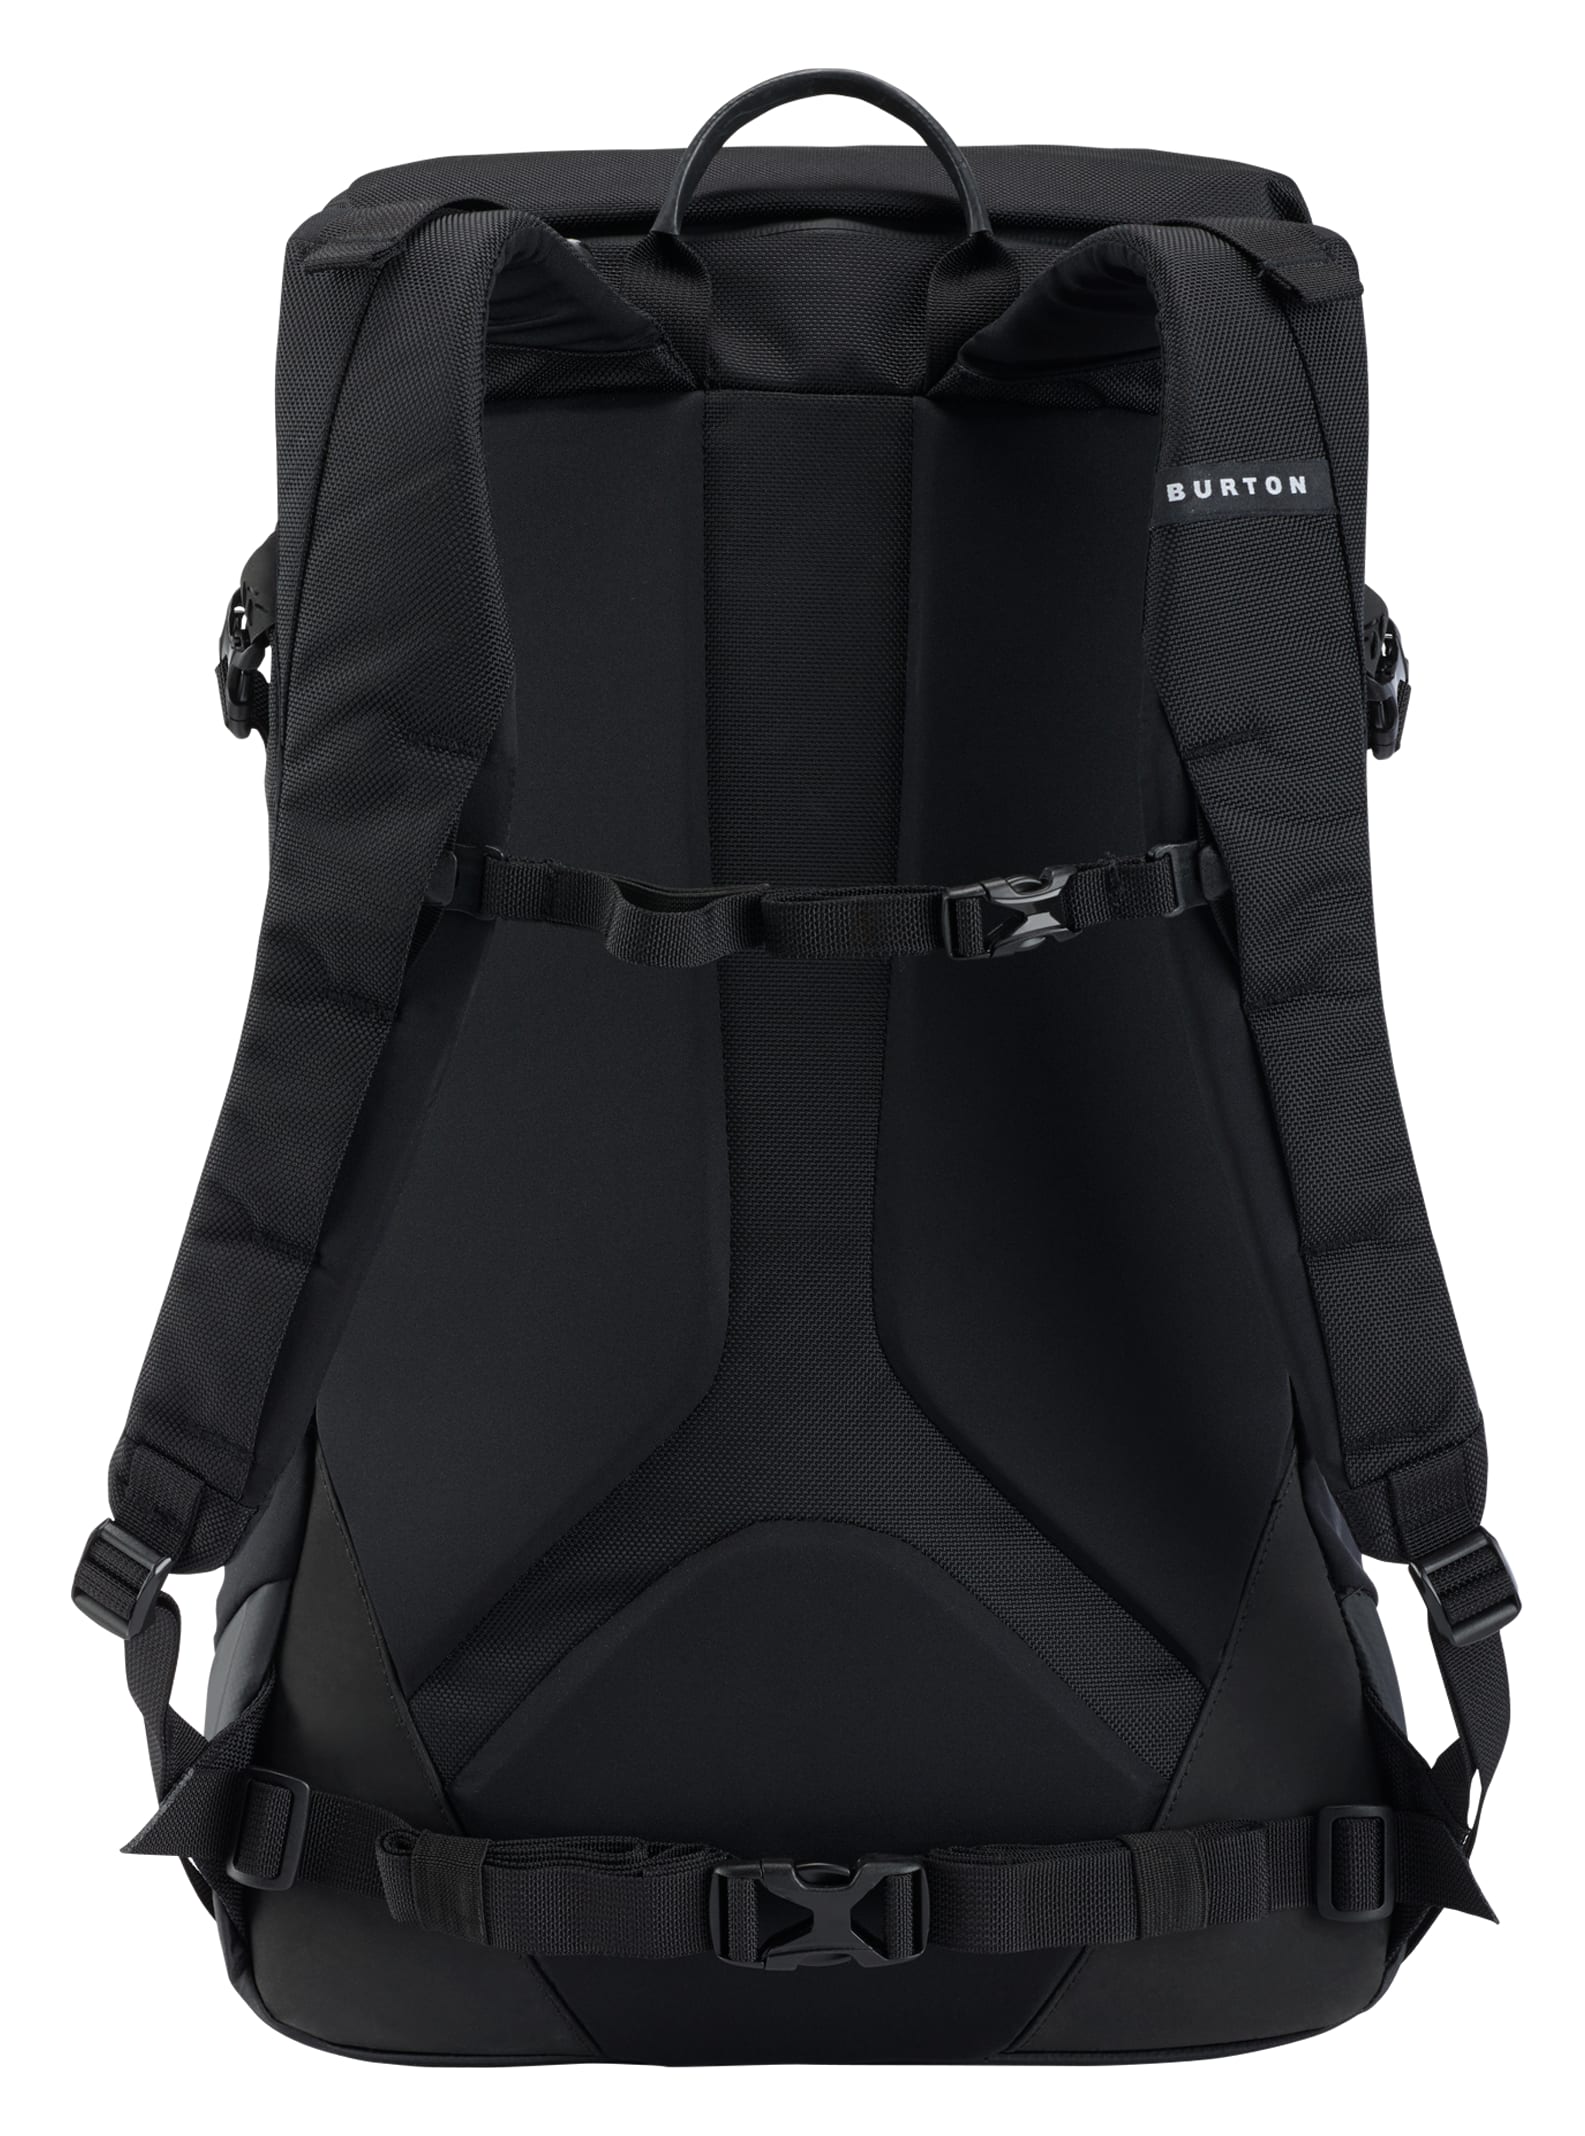 Burton Spruce 26L Backpack | Burton.com Spring 2021 JP